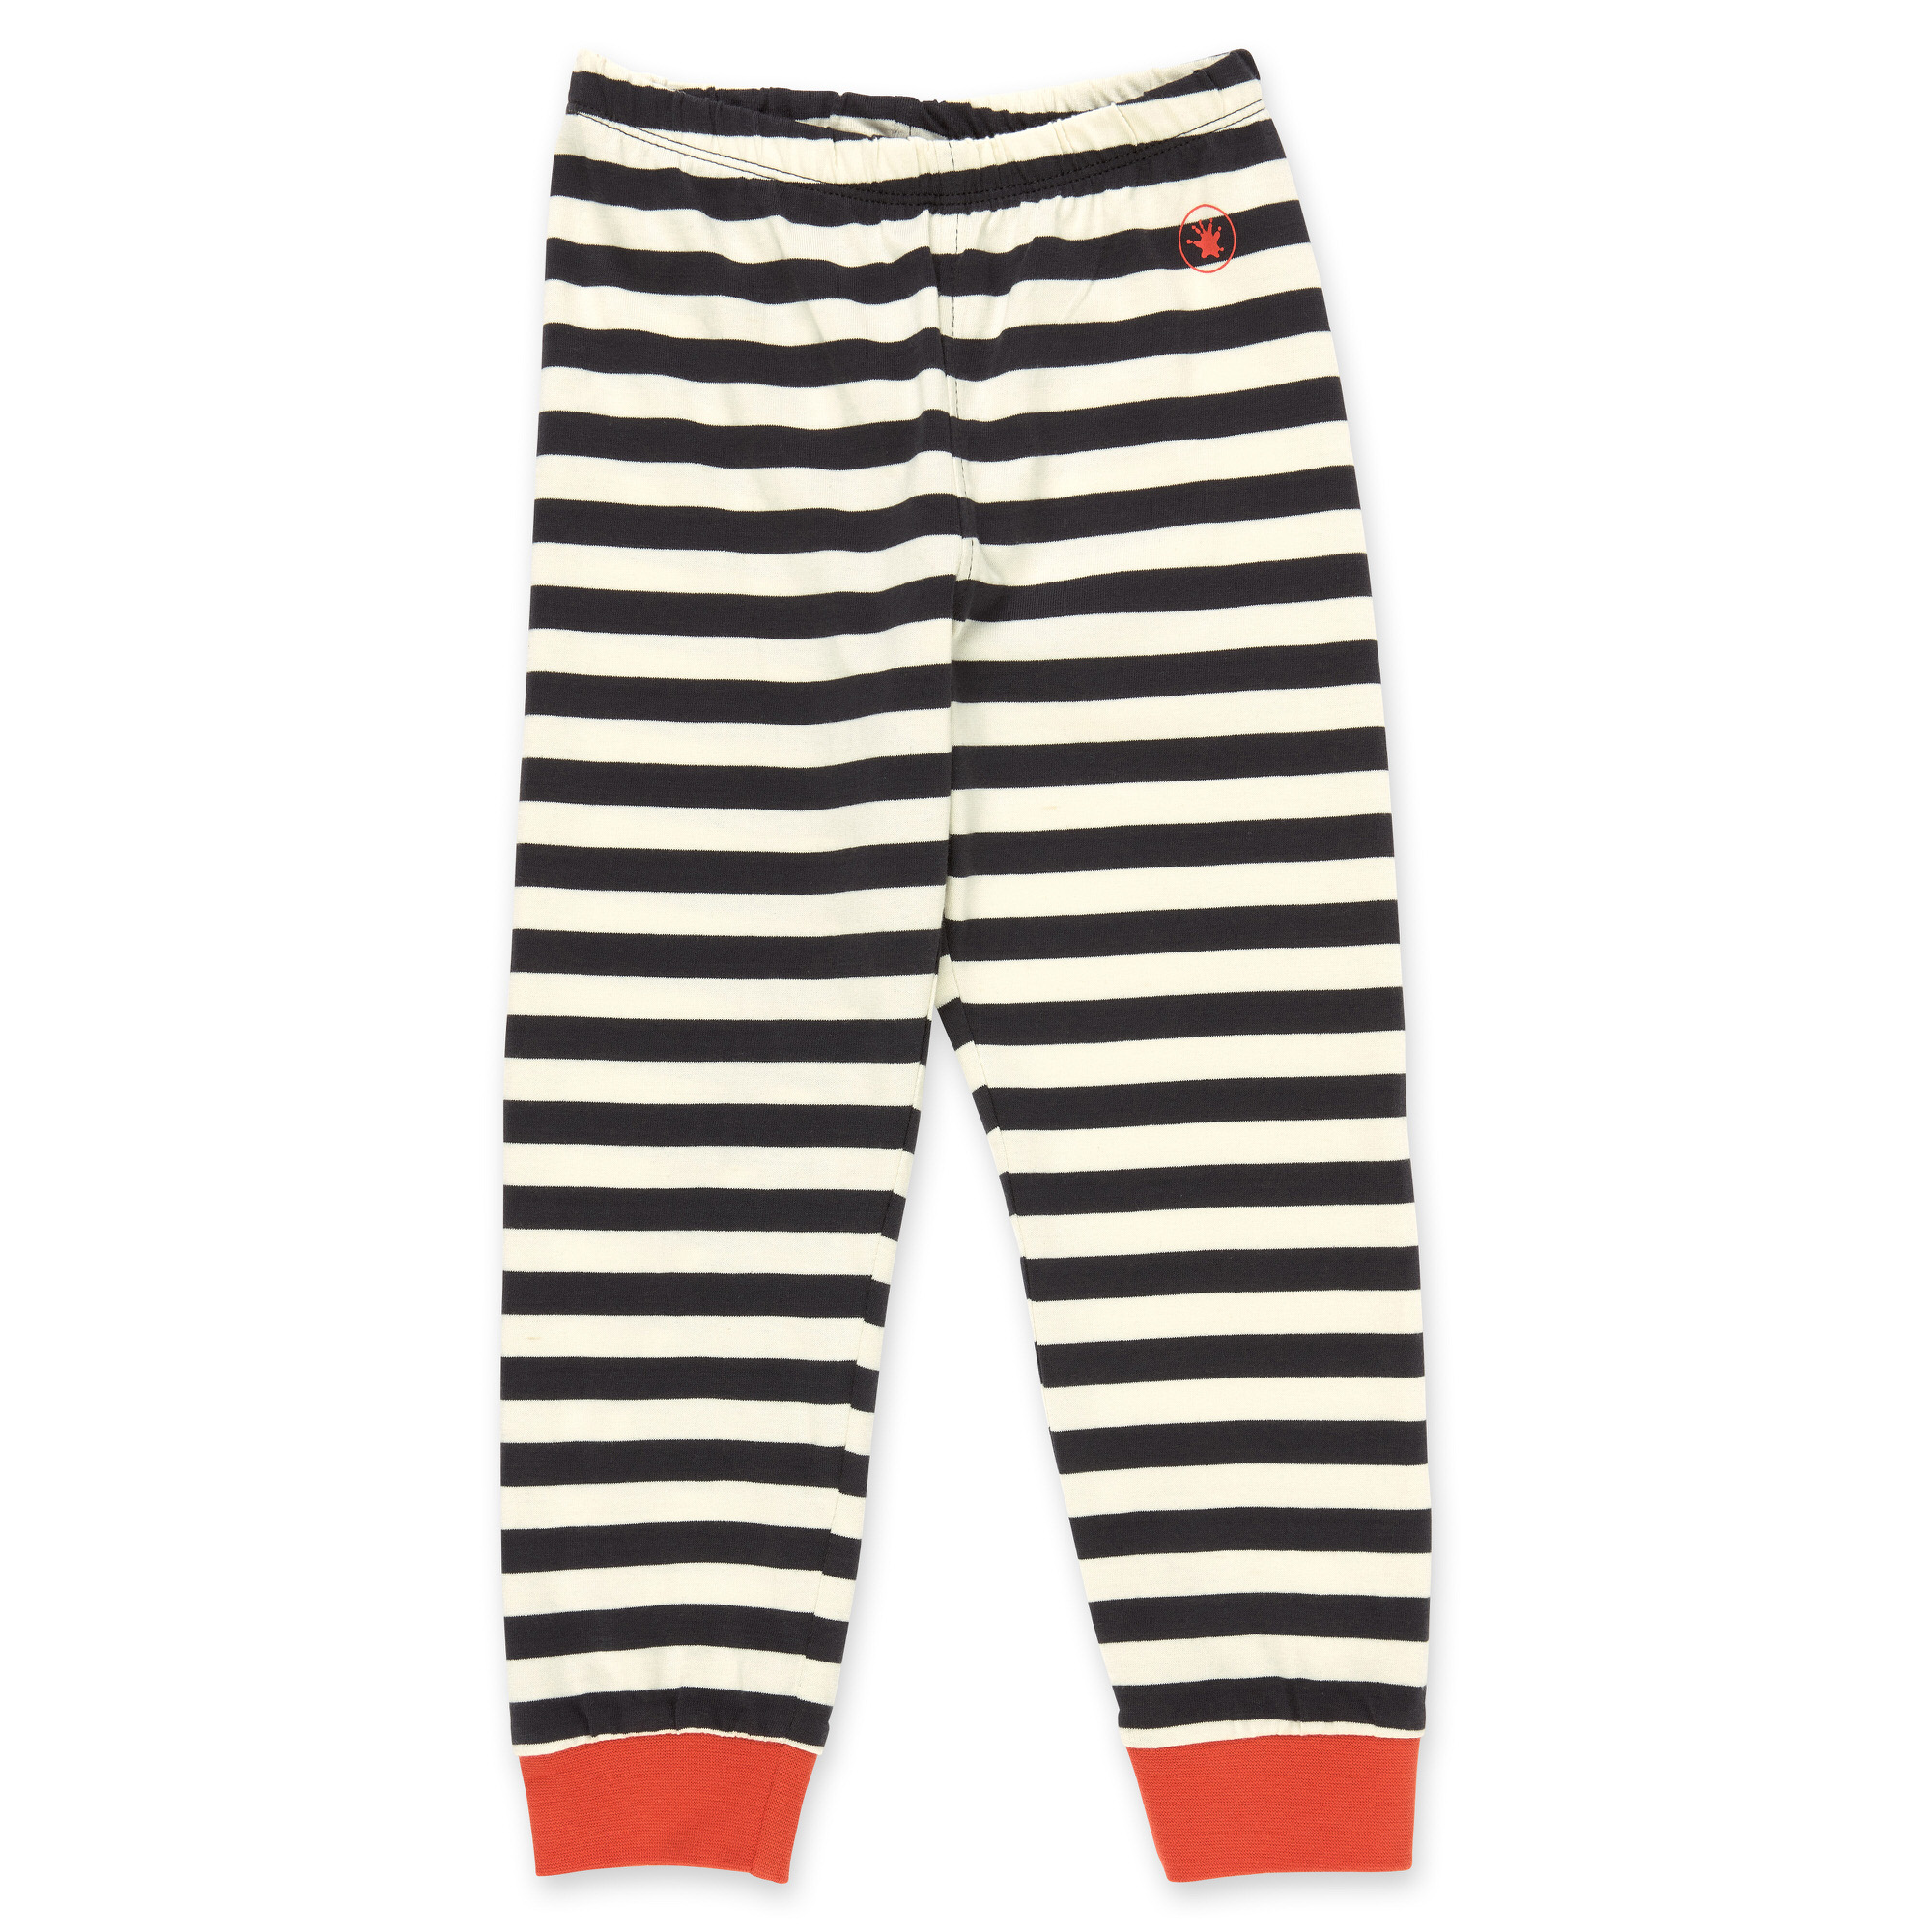 Children's summer pyjamas, red & black/white striped